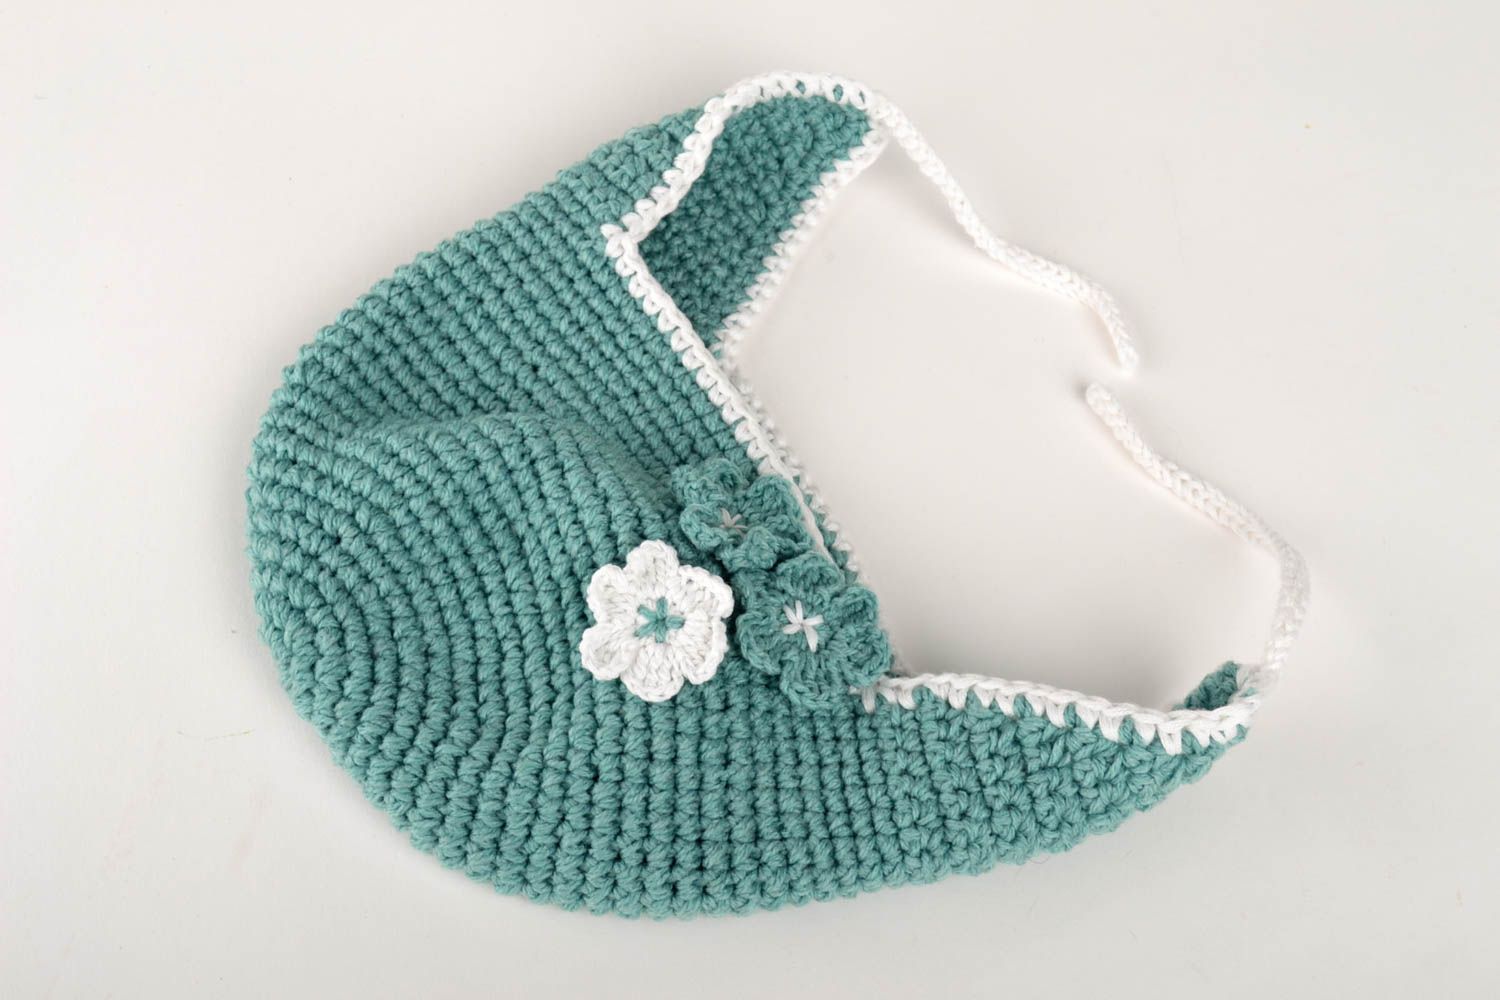 Unusual handmade crochet hat cute baby hats head accessories for kids gift ideas photo 5